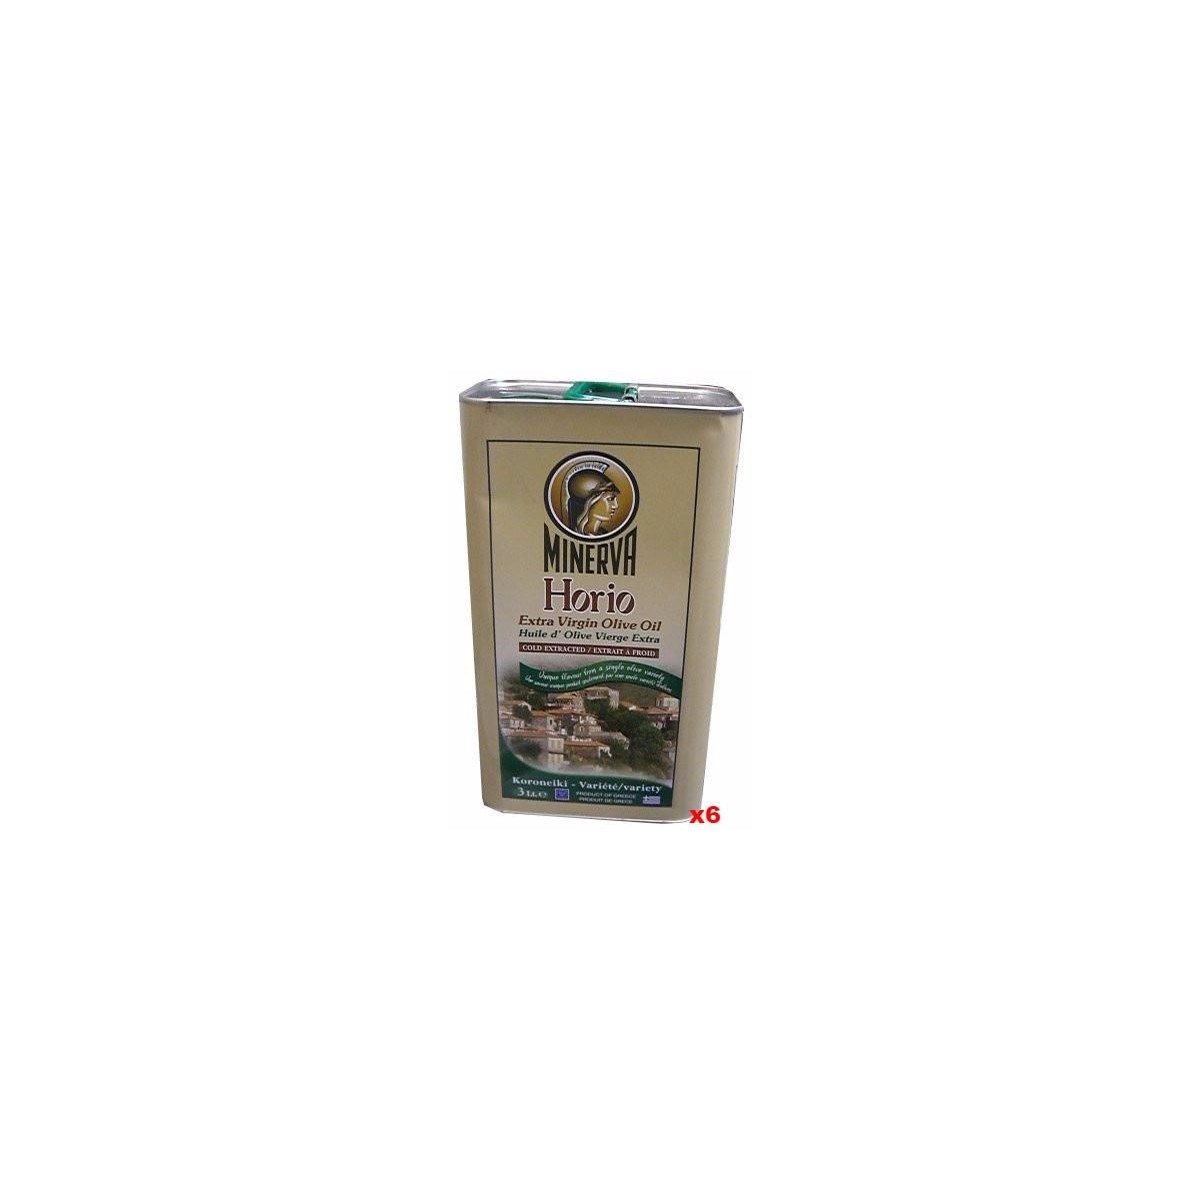 HORIO Extra Virgin Olive Oil 6/3 ltr tins